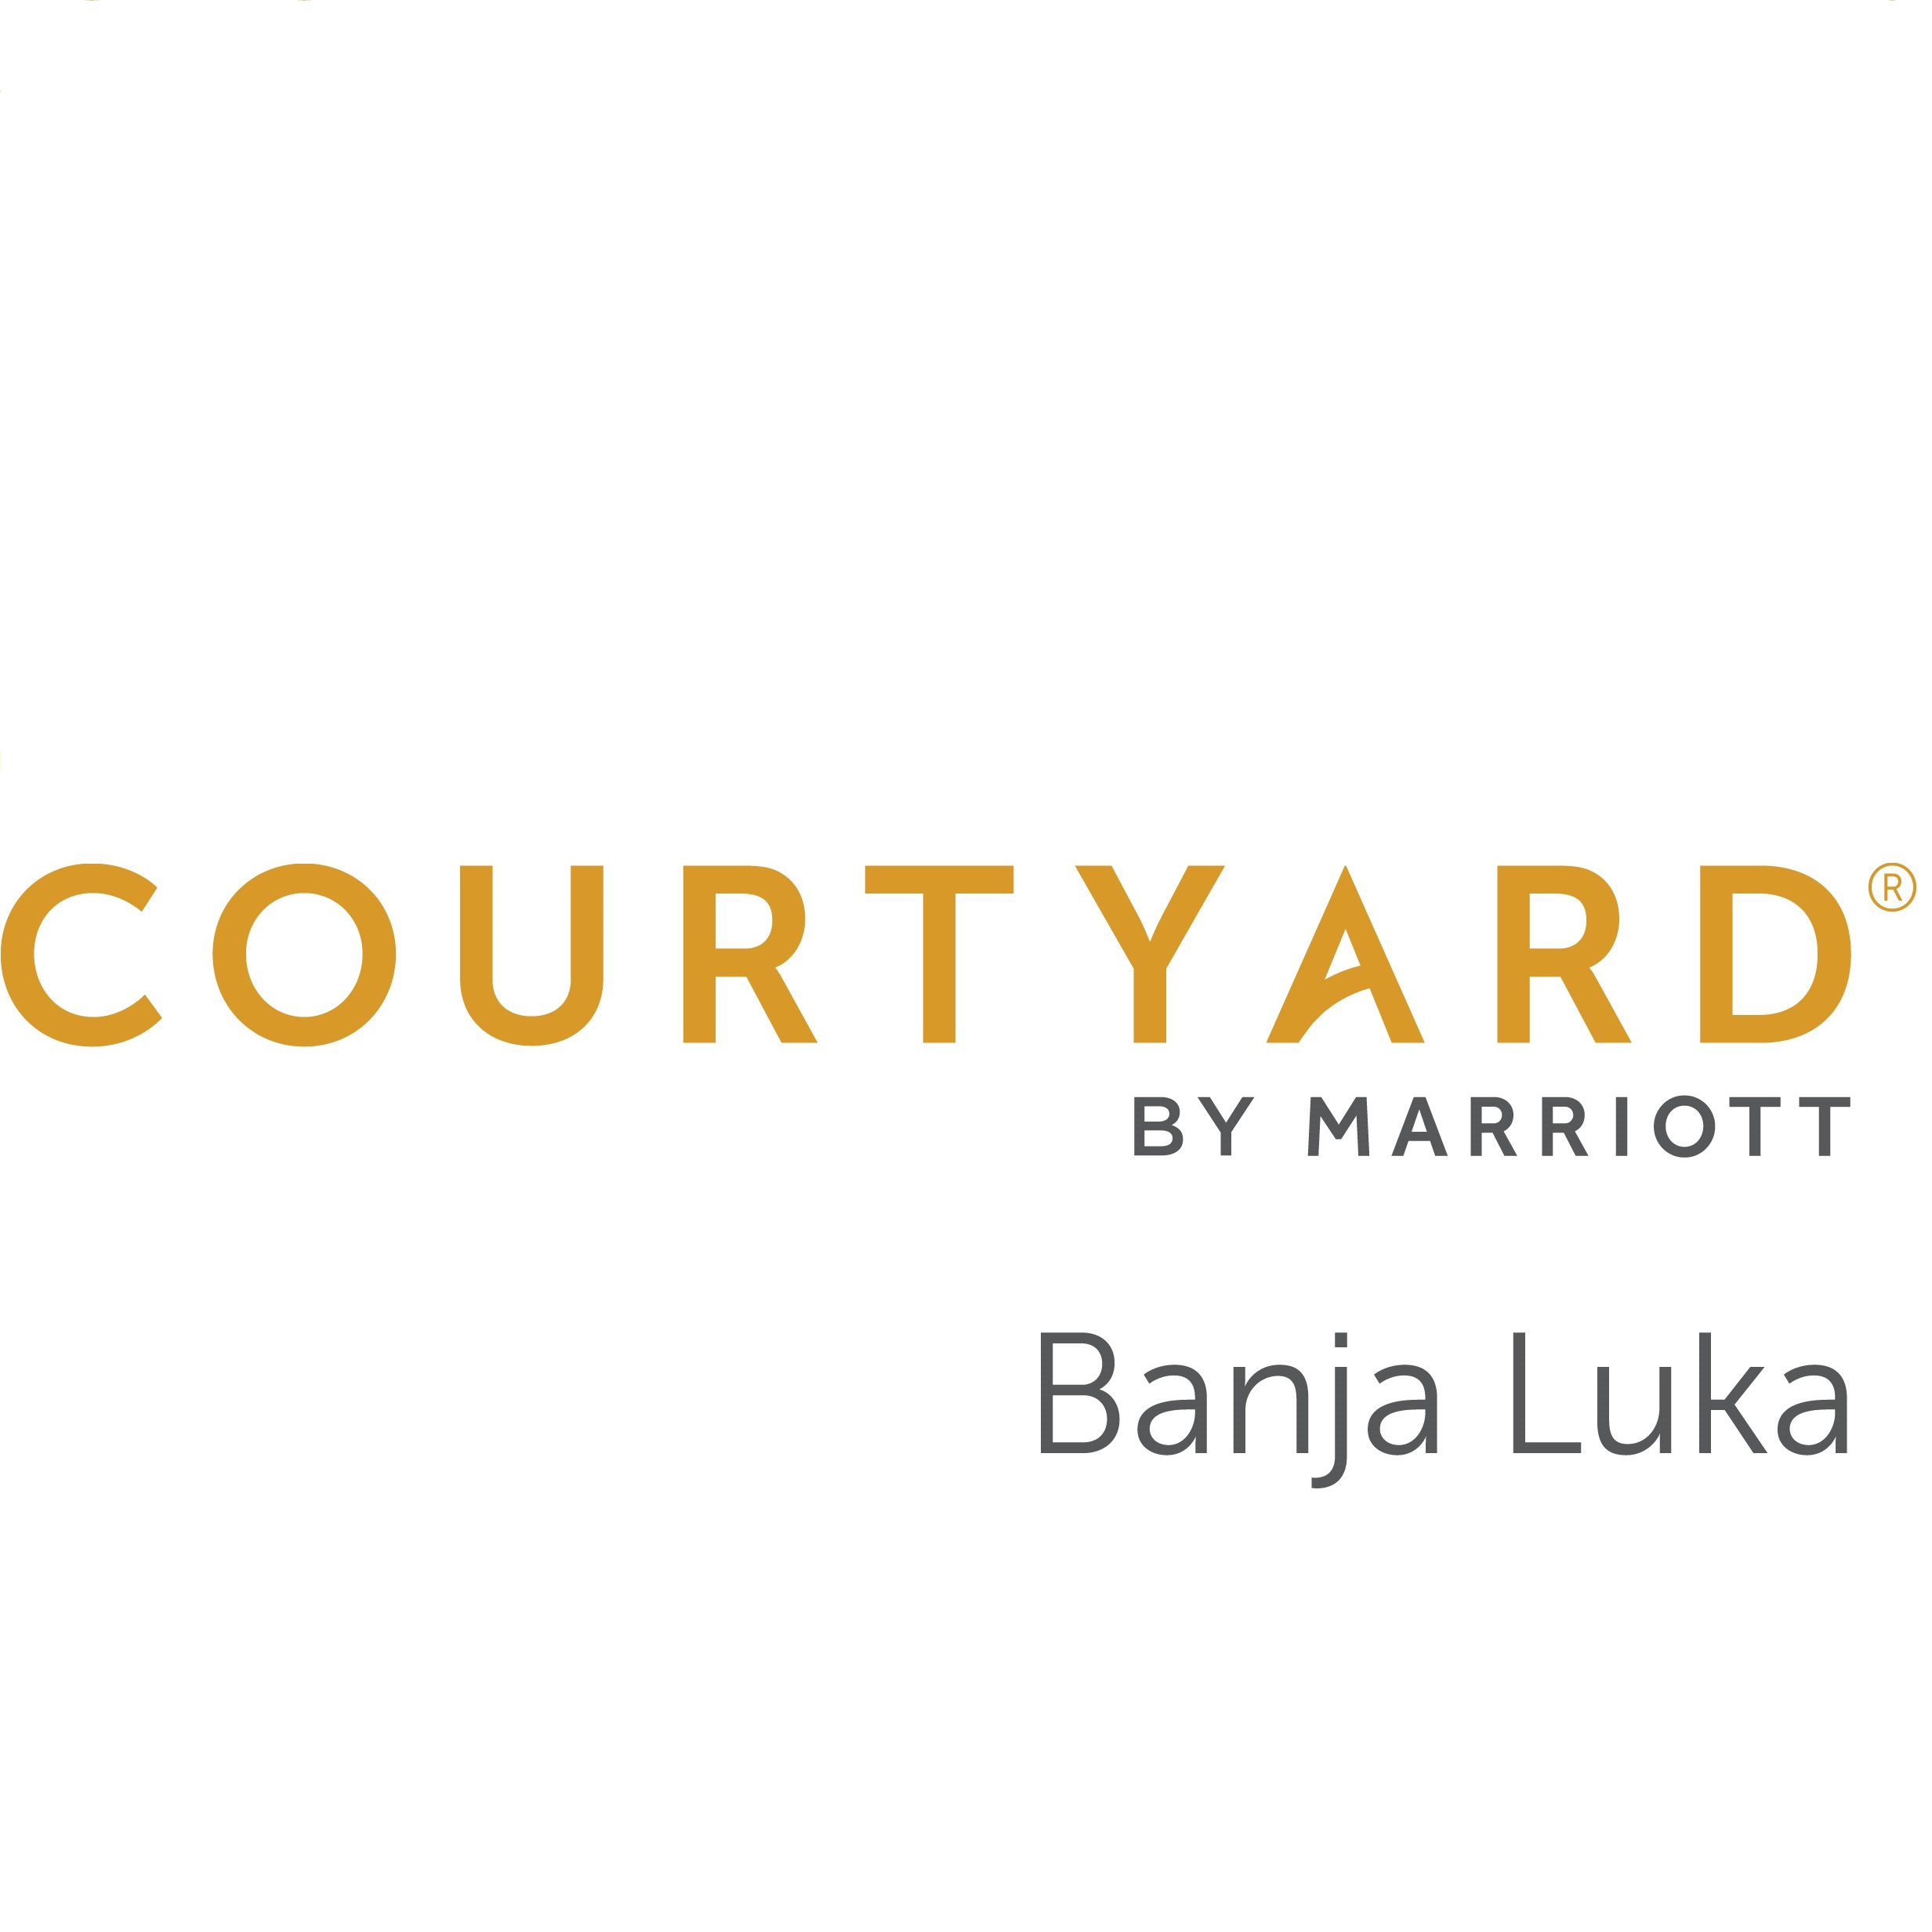 Courtyard by Marriott Banja Luka